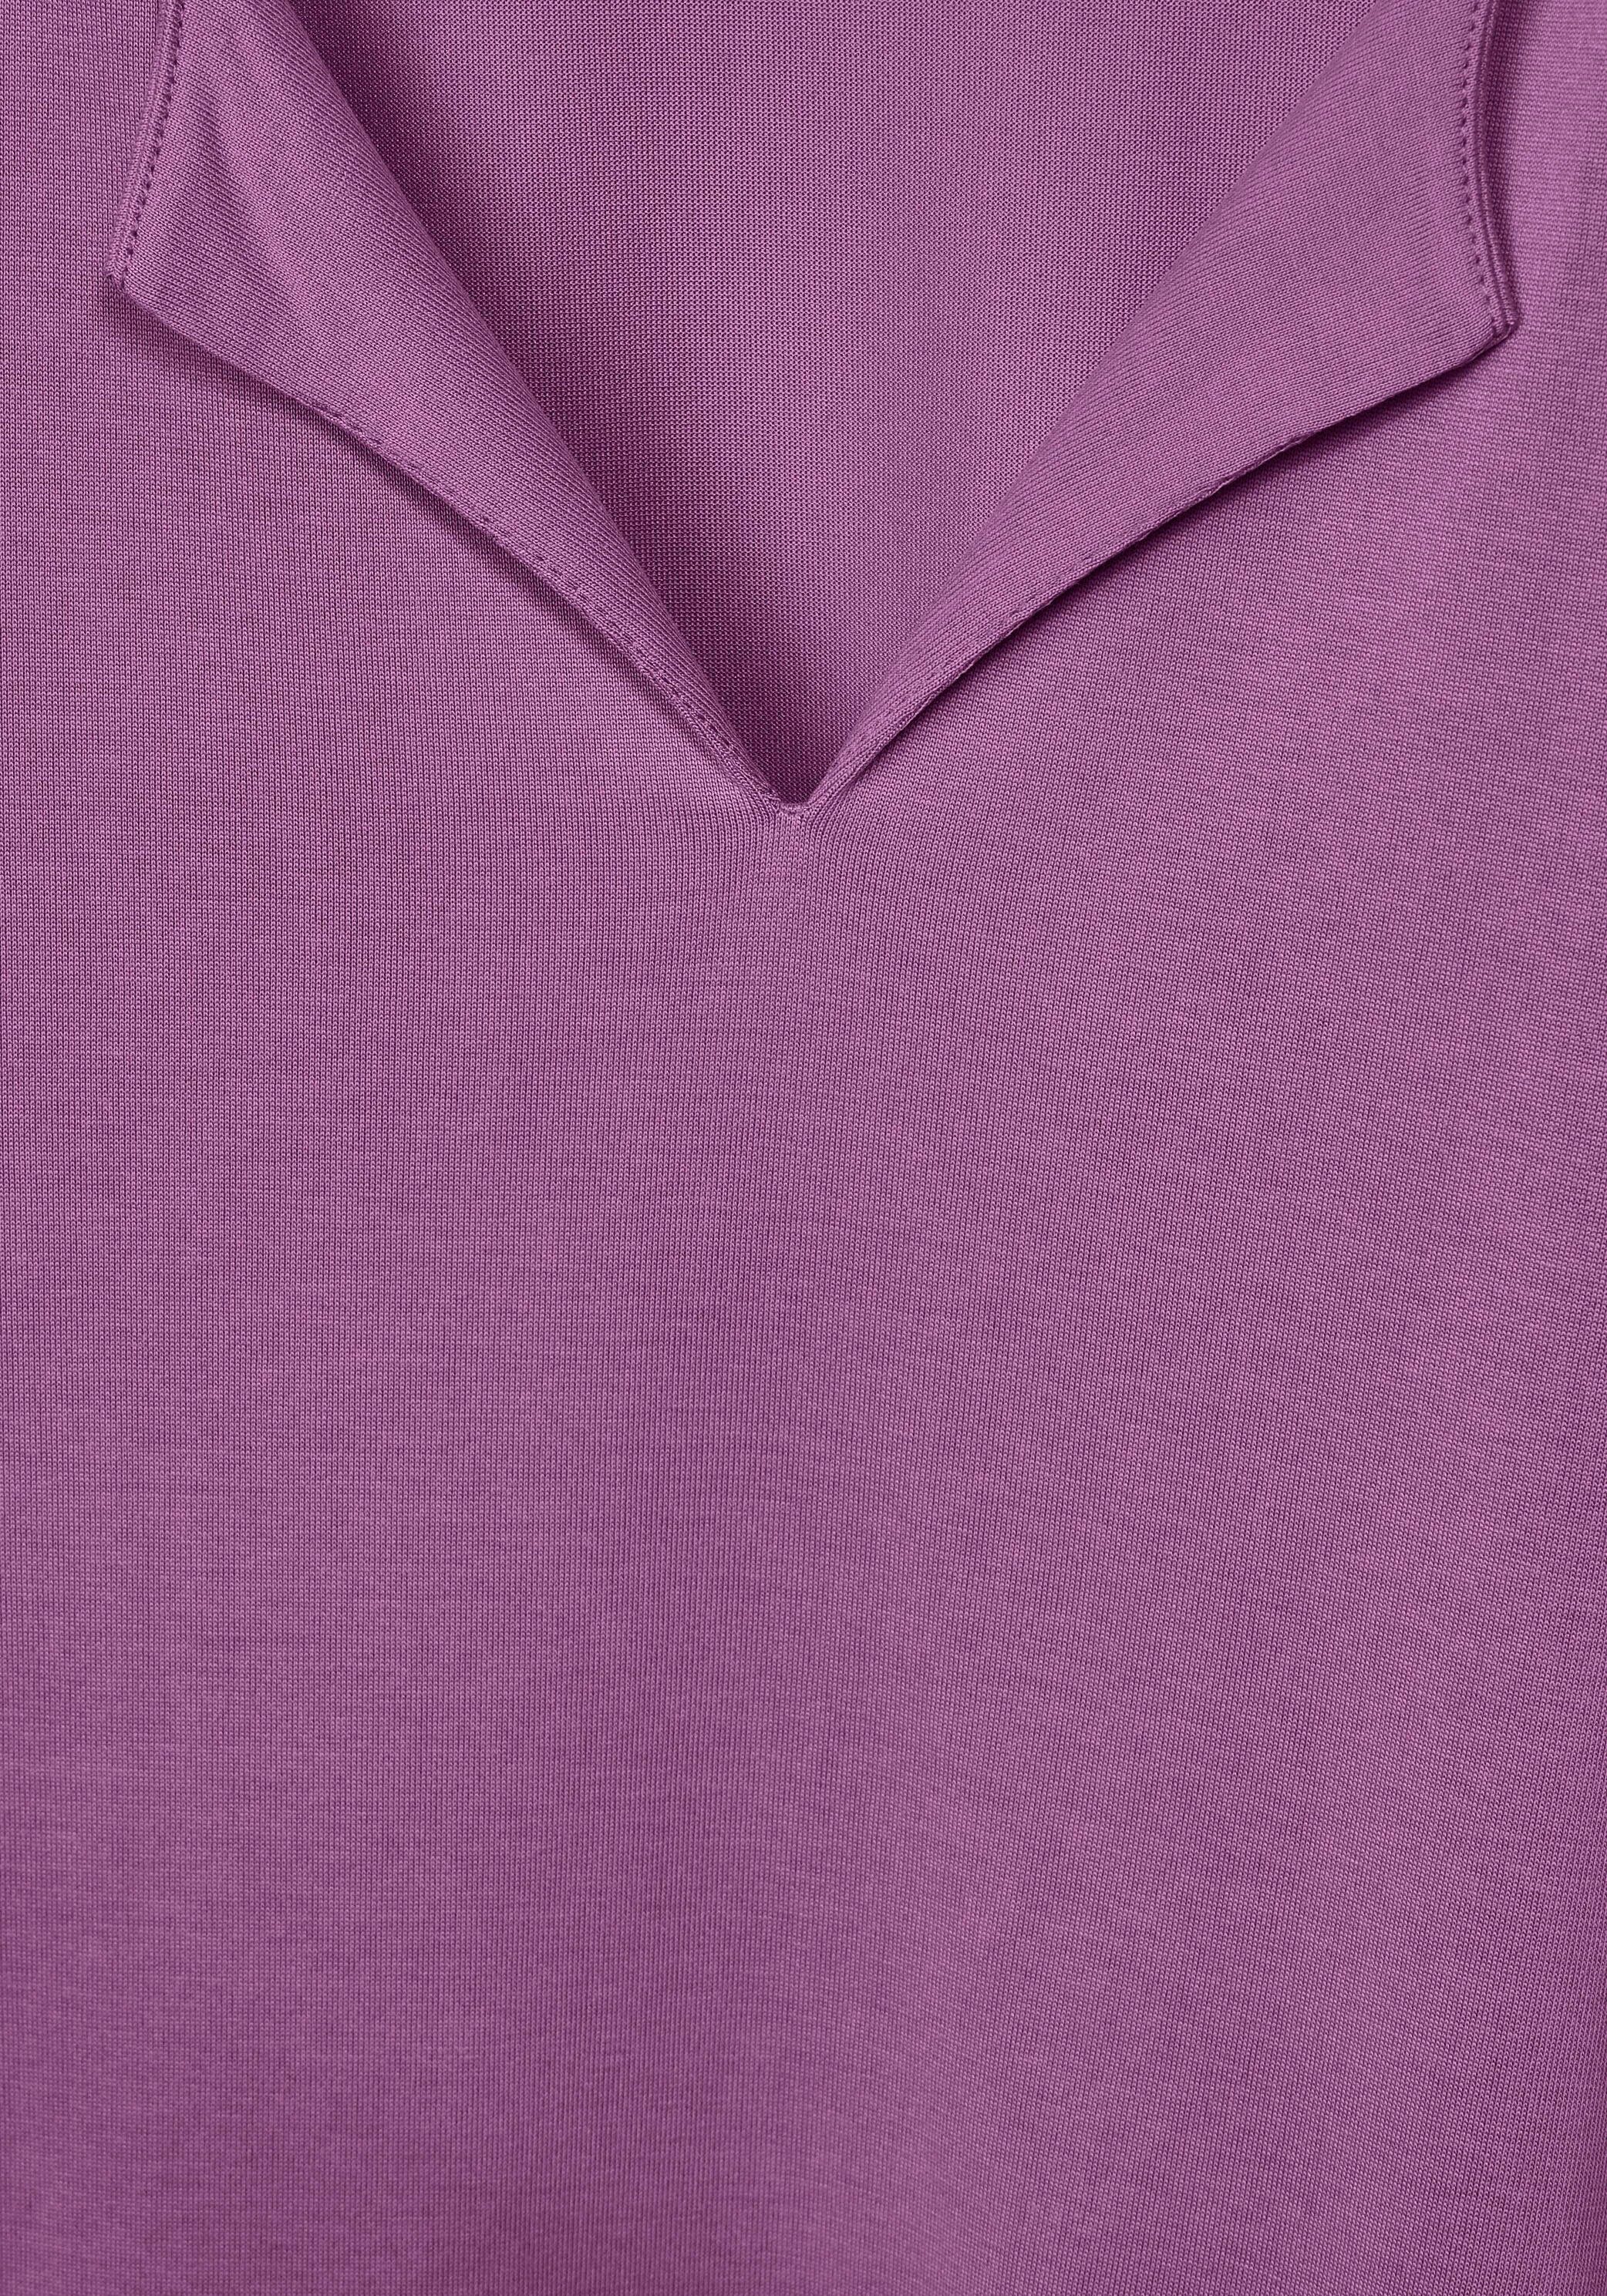 Shirttop lilac im meta Seidenlook STREET ONE